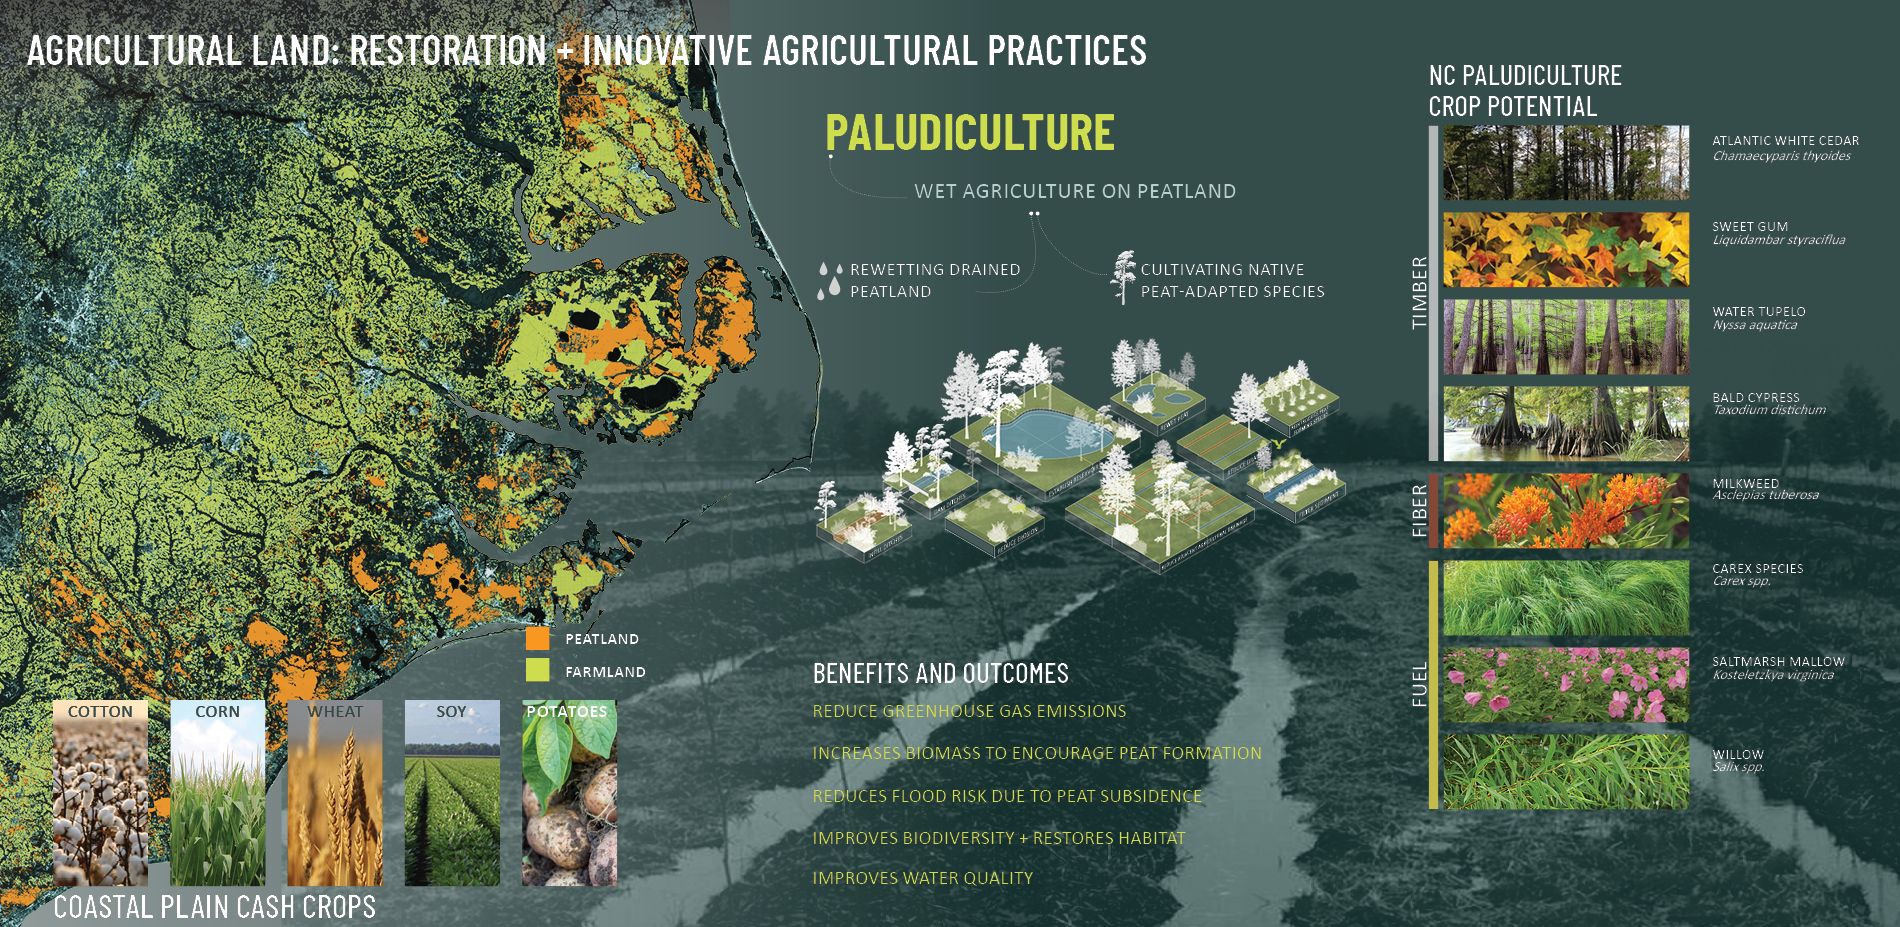 Agricultural Land: Restoration + Innovative Agricultural Practices